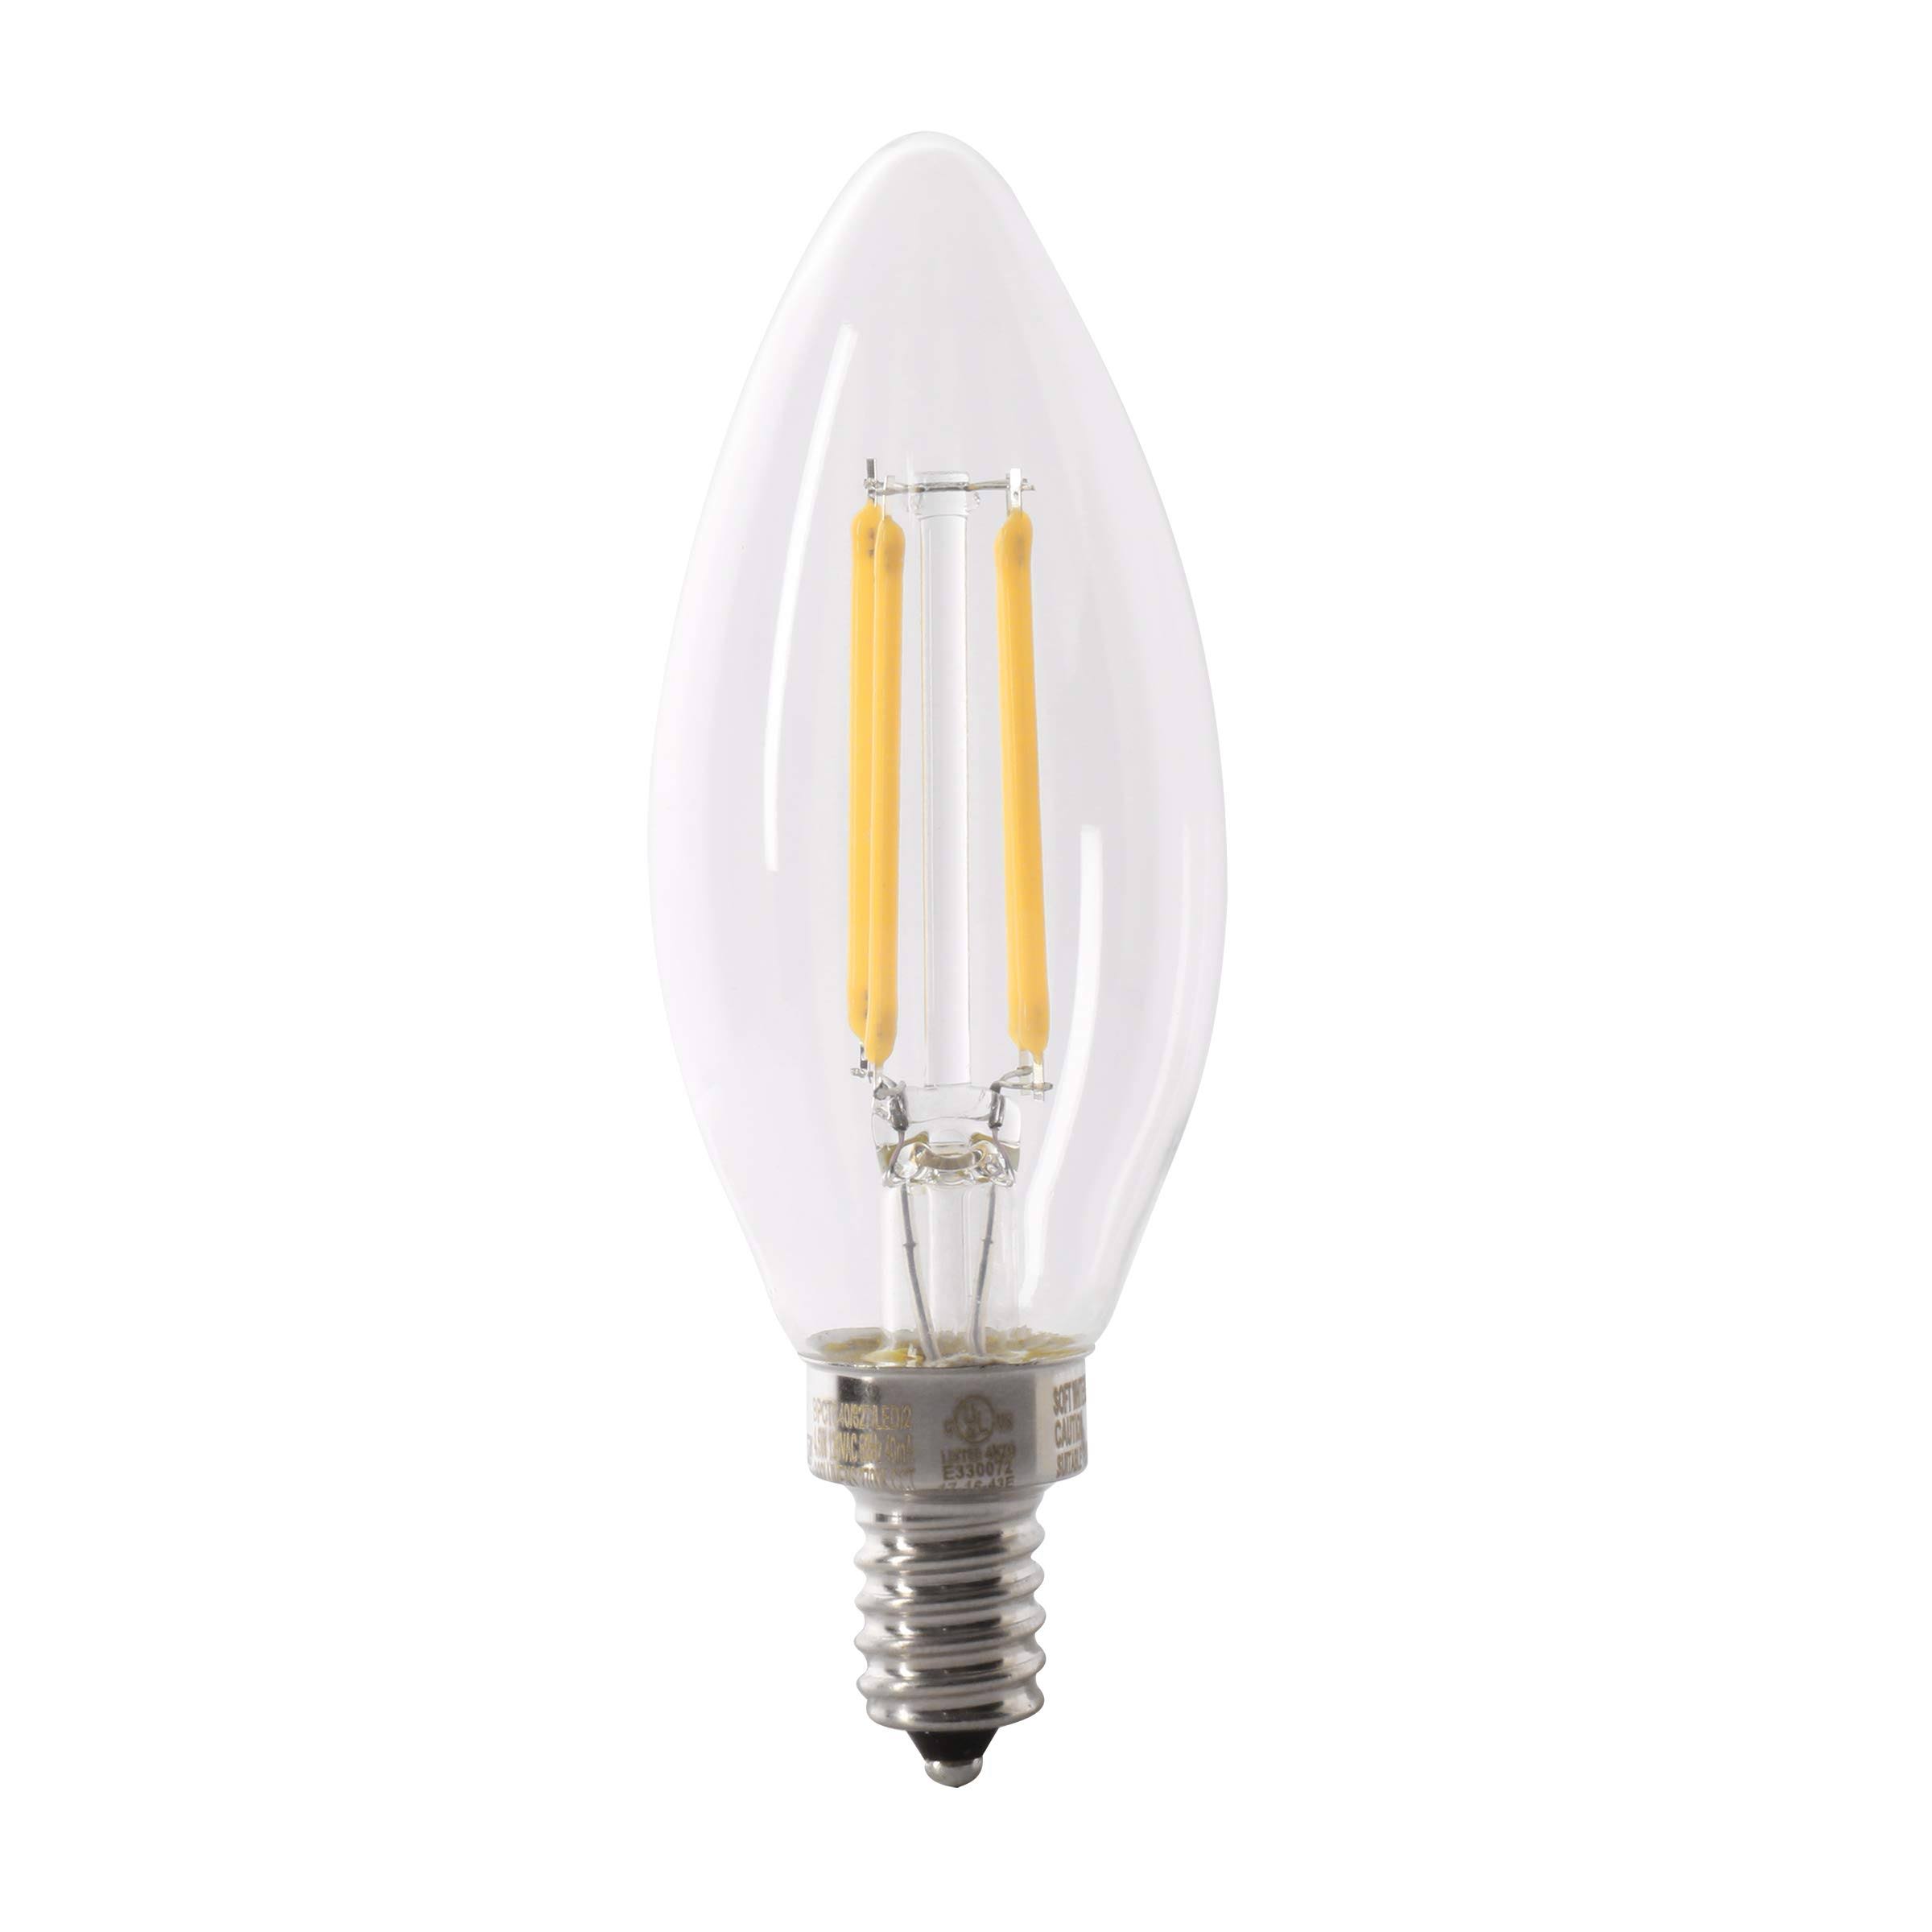 Feit Electric B10 LED Bulbs Set - 2pcs Set, 500 Lumens, Soft White, 60W